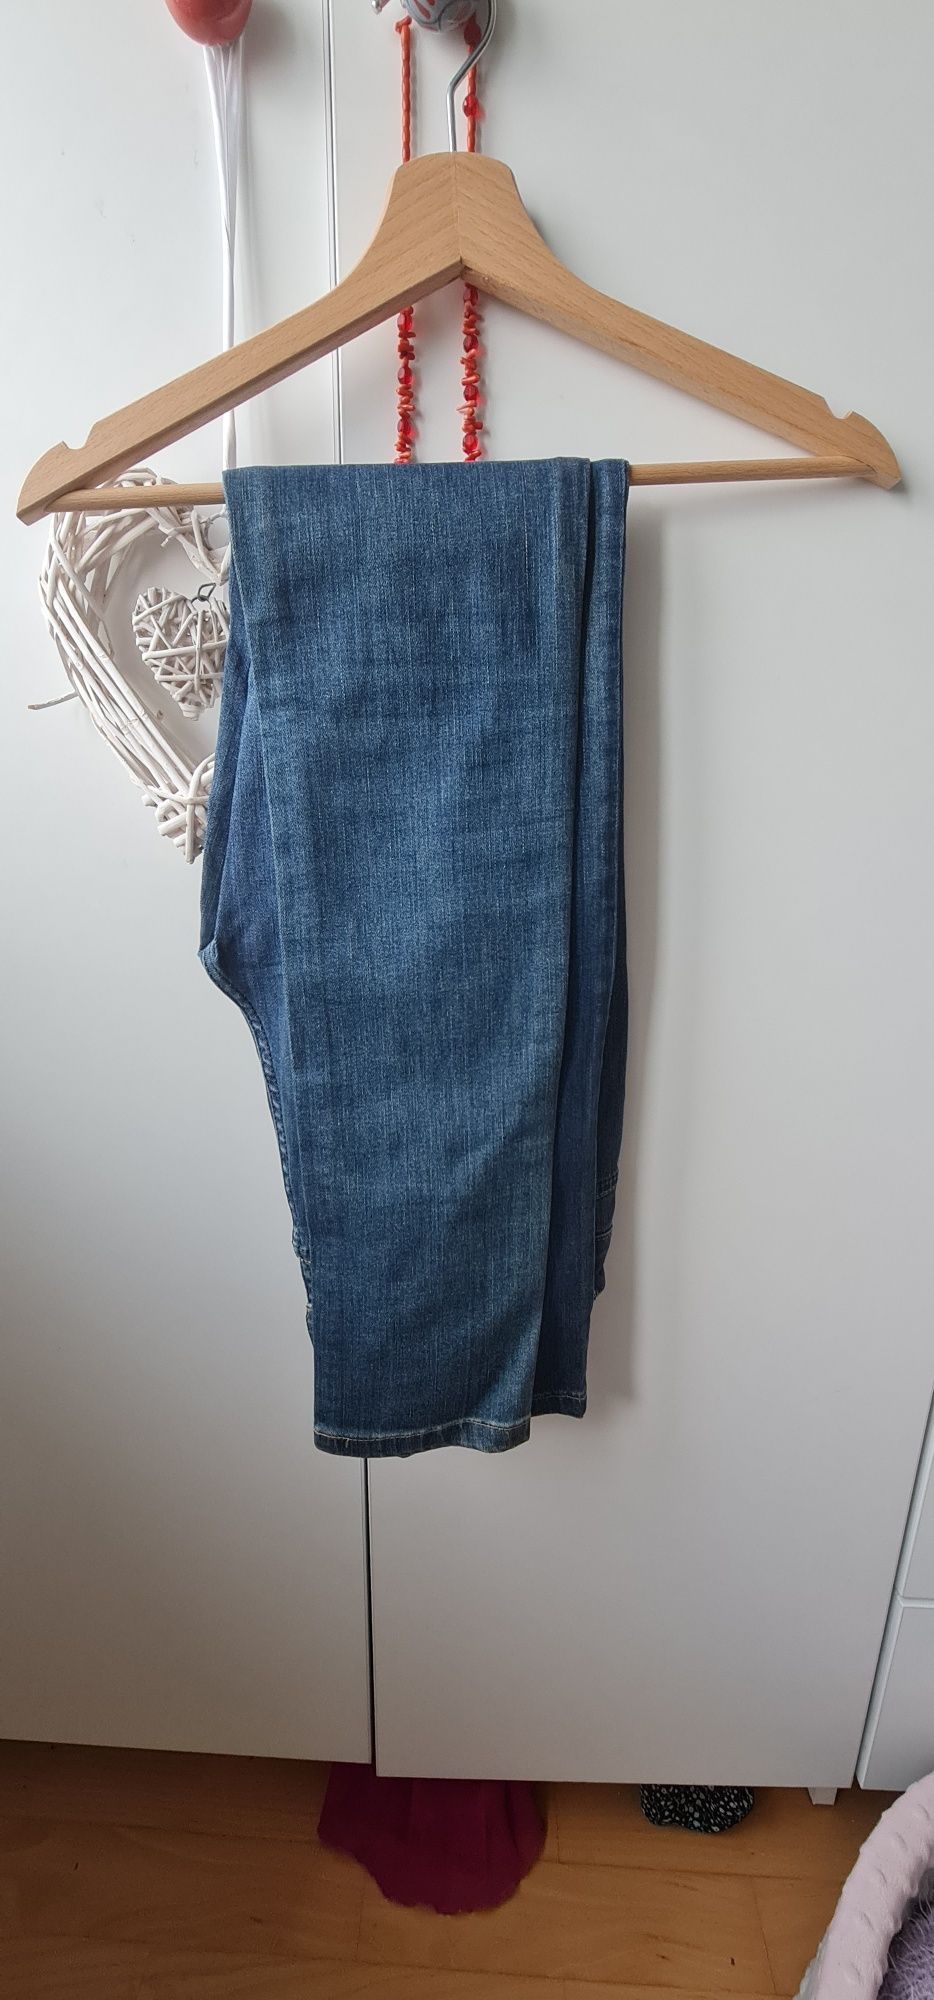 Jeansy Armani jeans r. 34/36